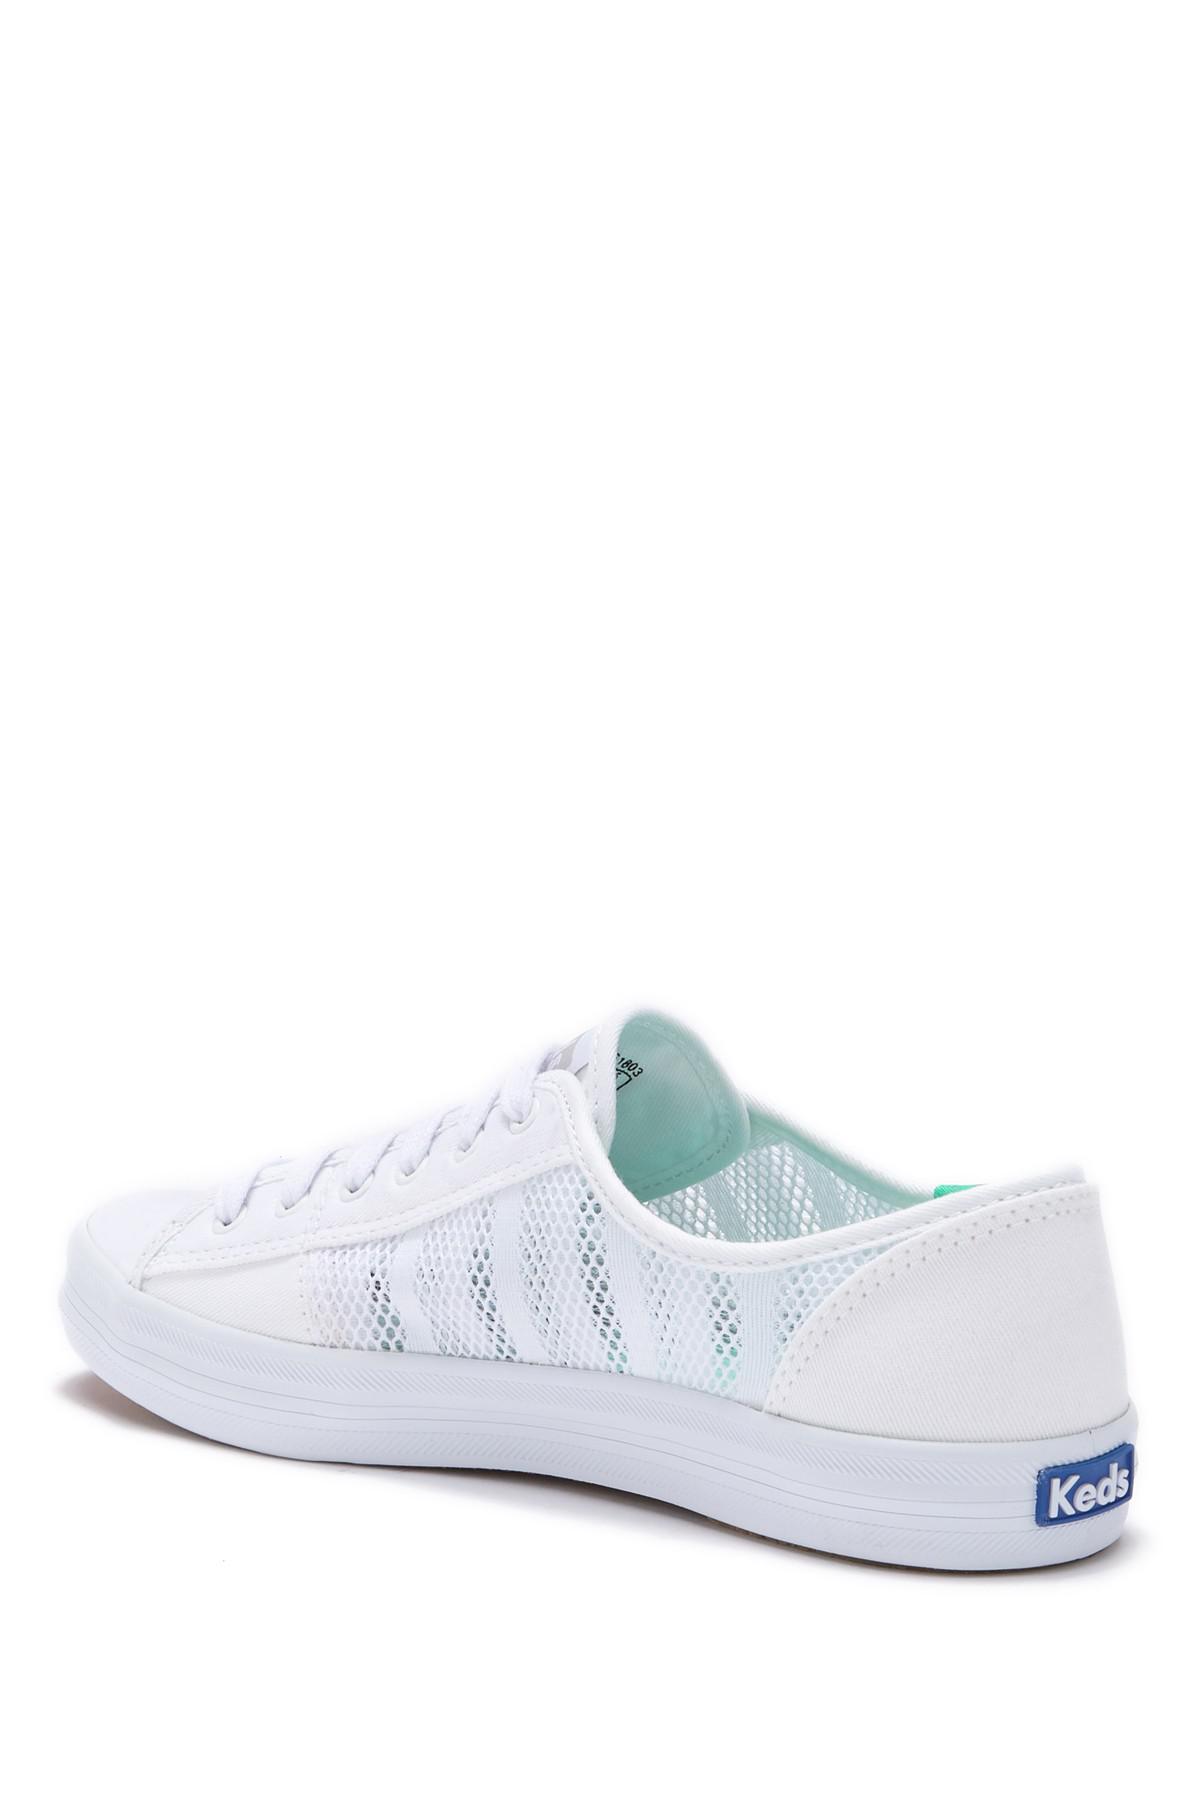 keds white mesh sneakers